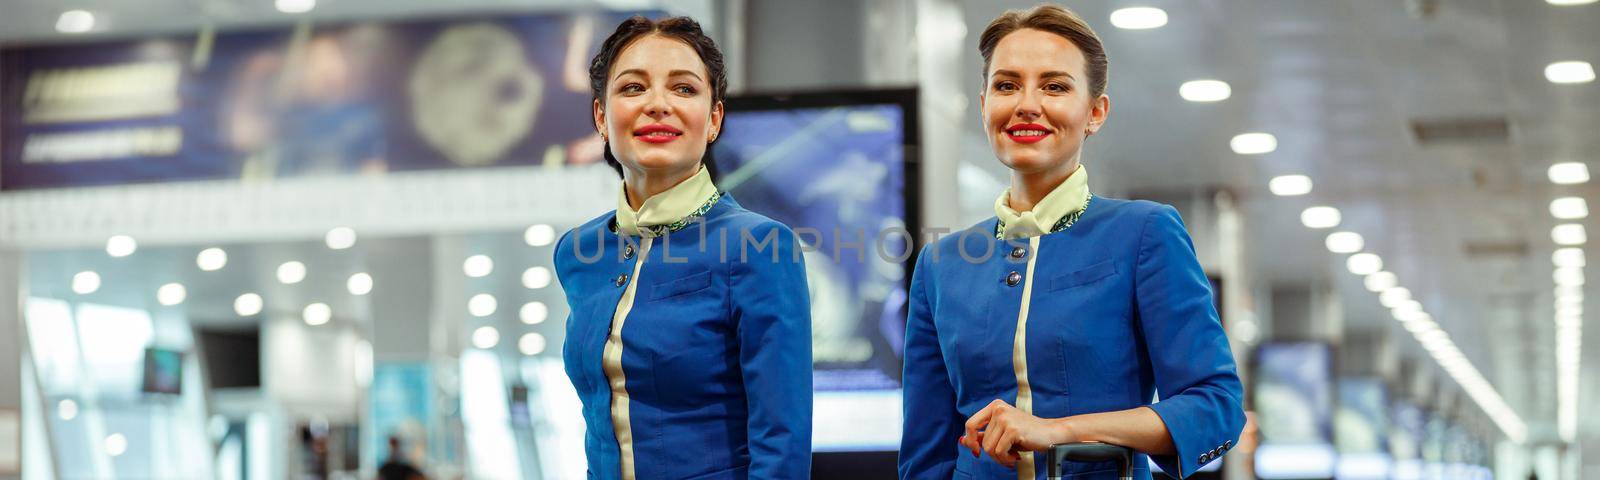 Joyful women stewardesses walking down airport terminal by Yaroslav_astakhov